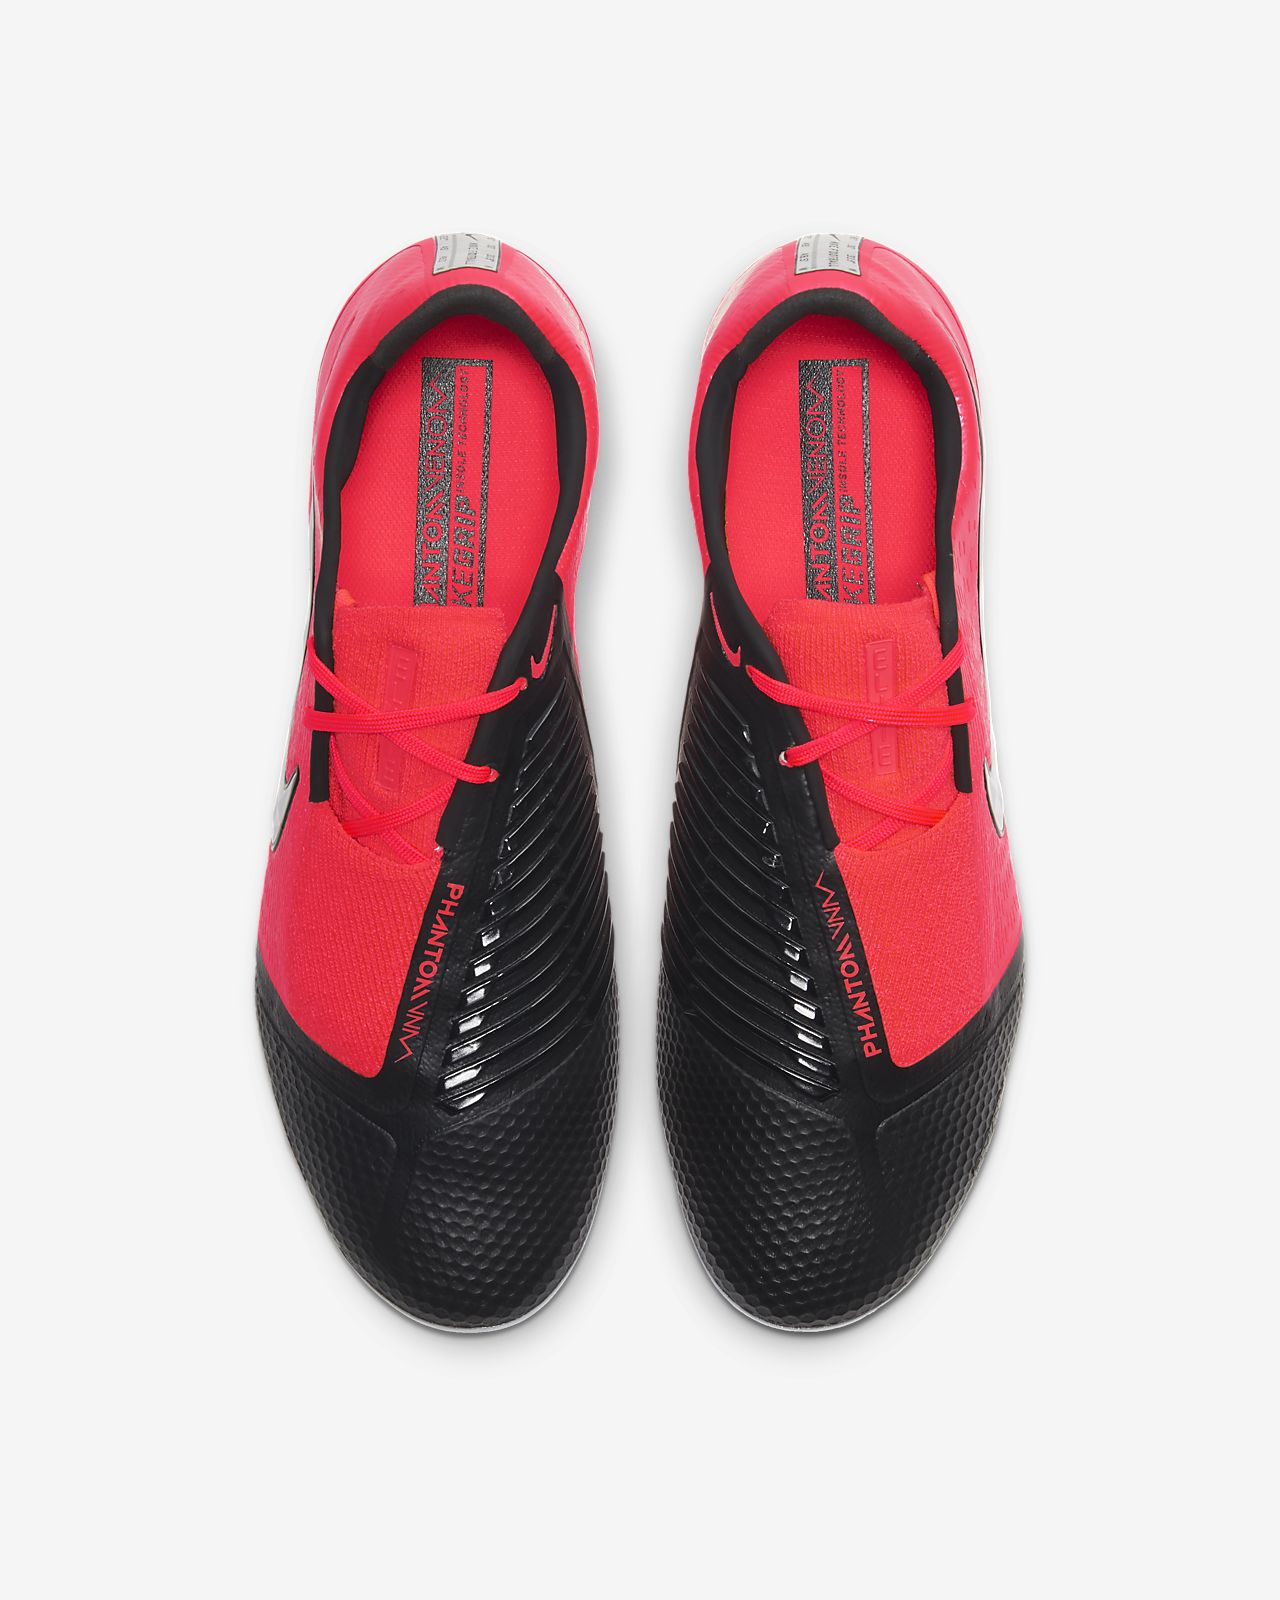 Nike Phantom Venom Elite FG New Boots Black Volt Soccer .